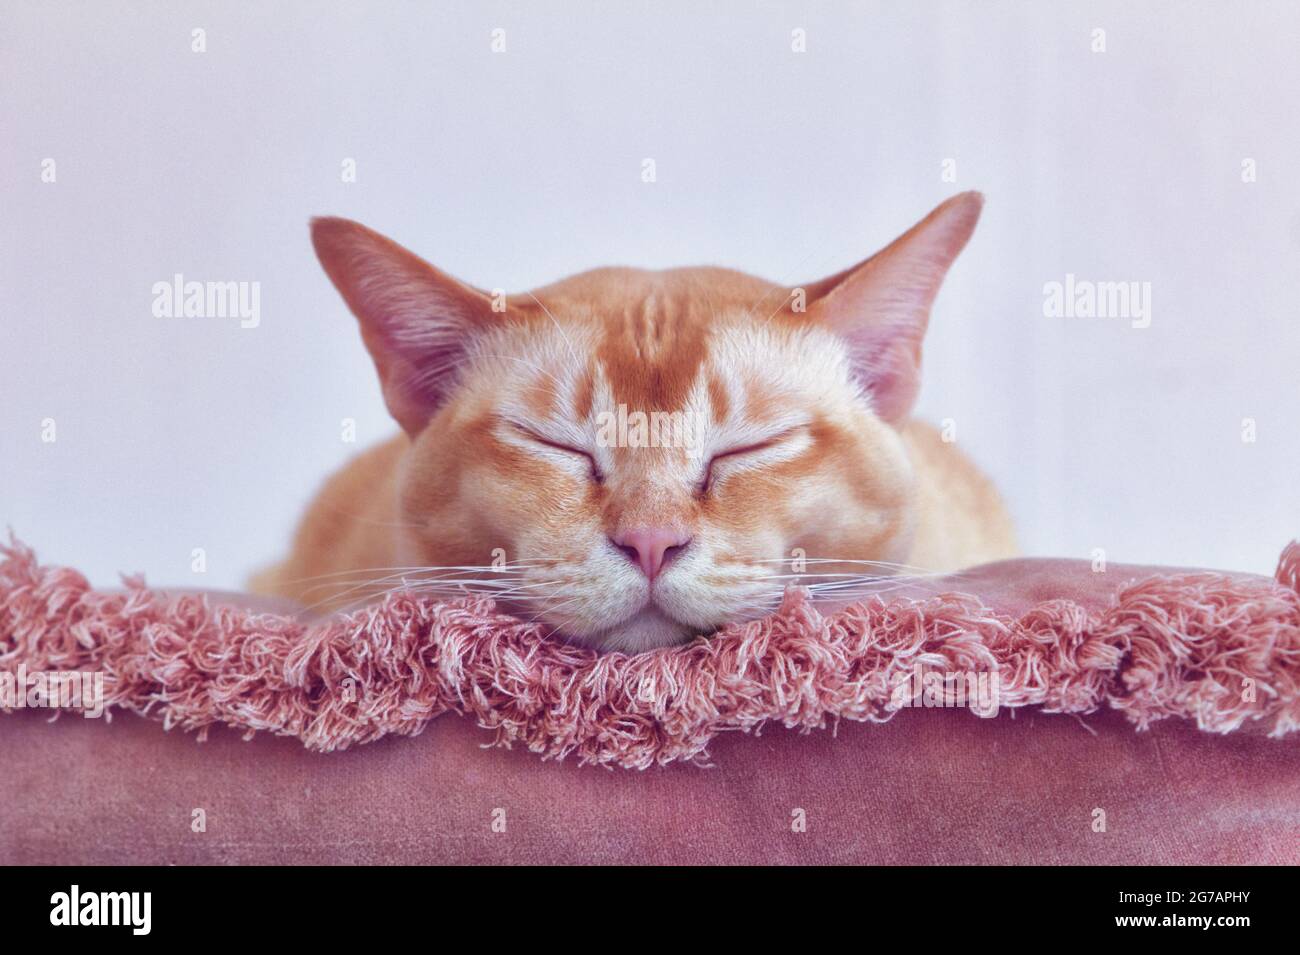 Cat sleeping on a soft pink cushion Stock Photo